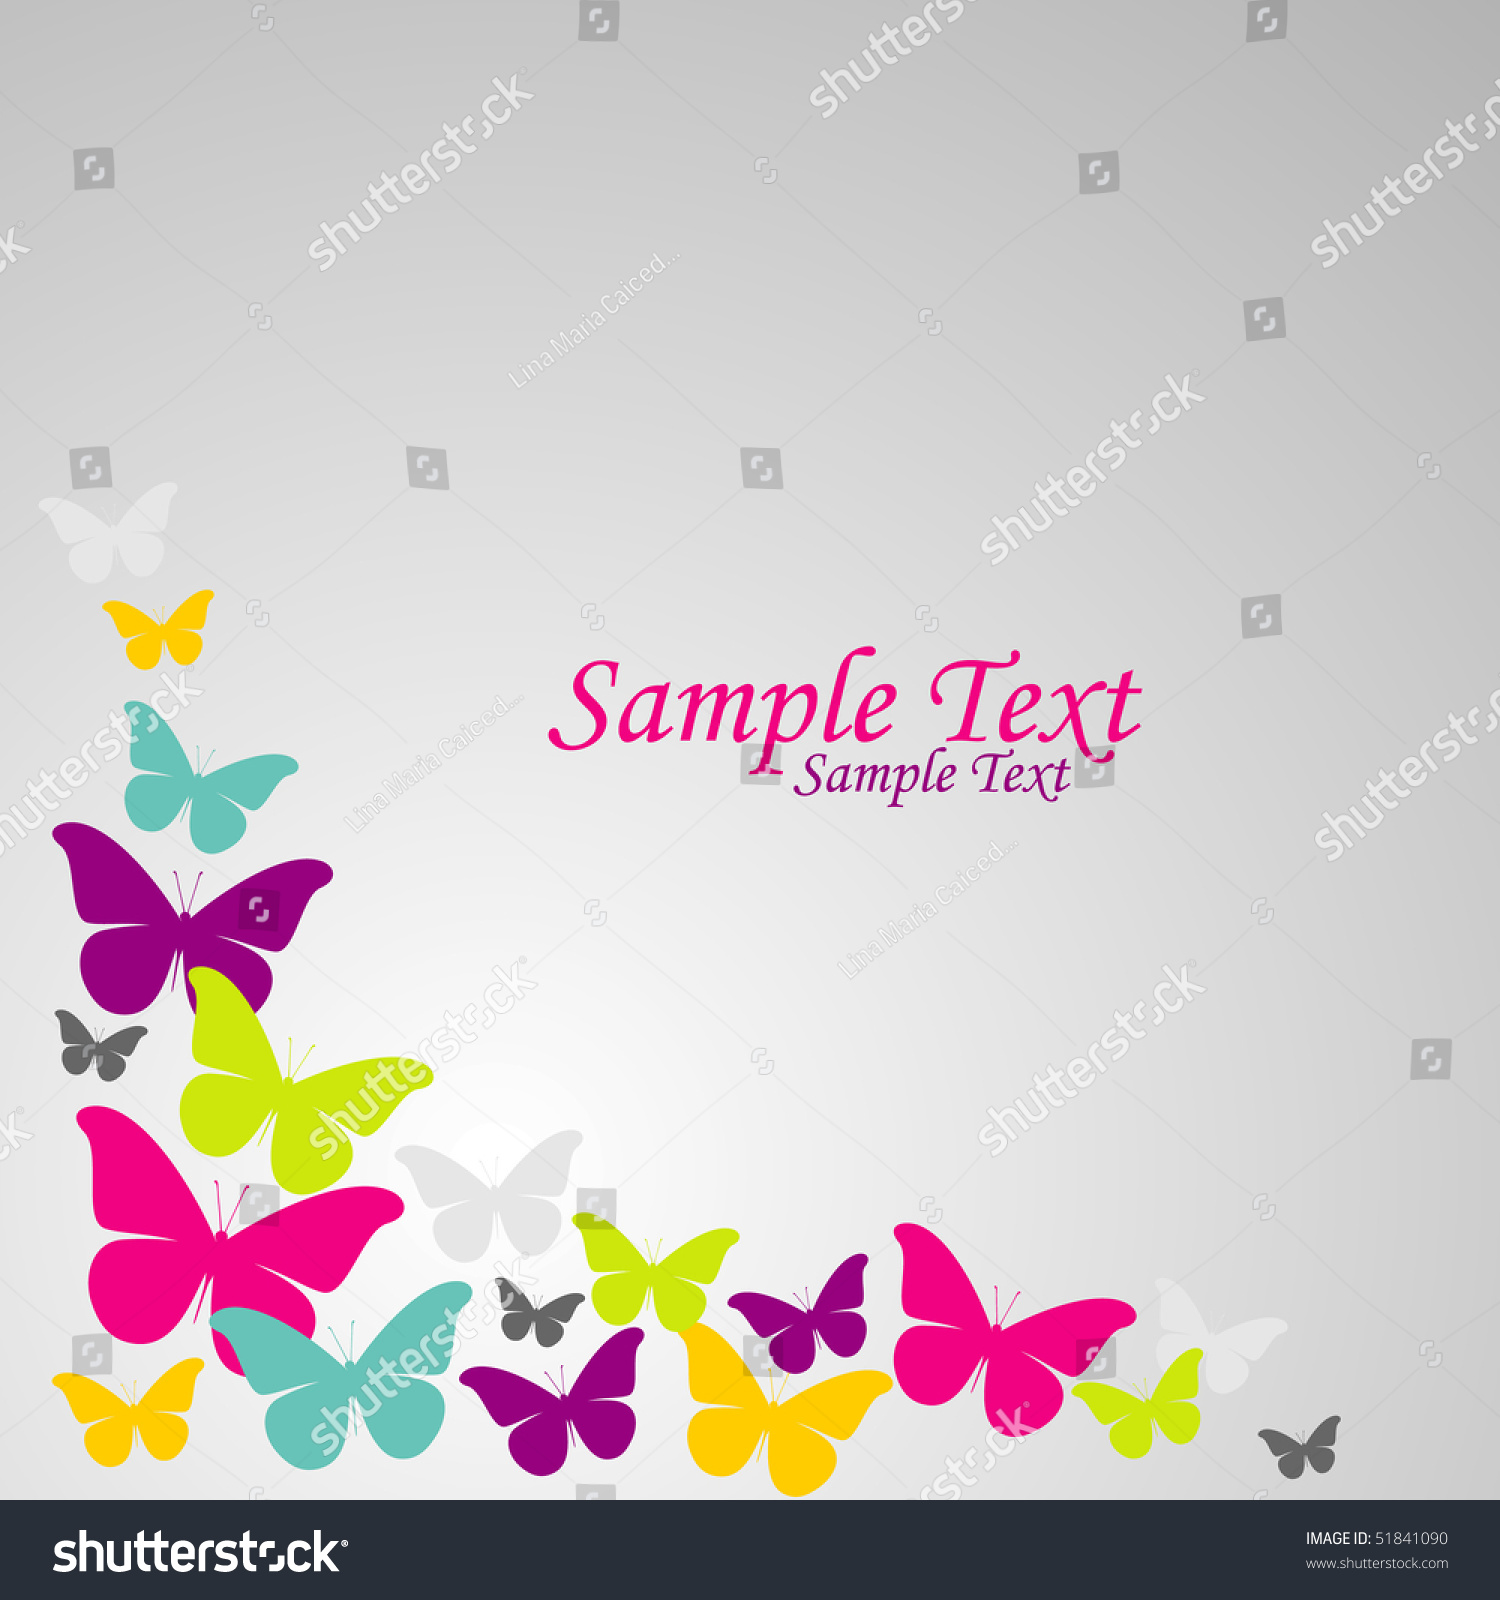 Butterfly Background Stock Vector Illustration 51841090 : Shutterstock